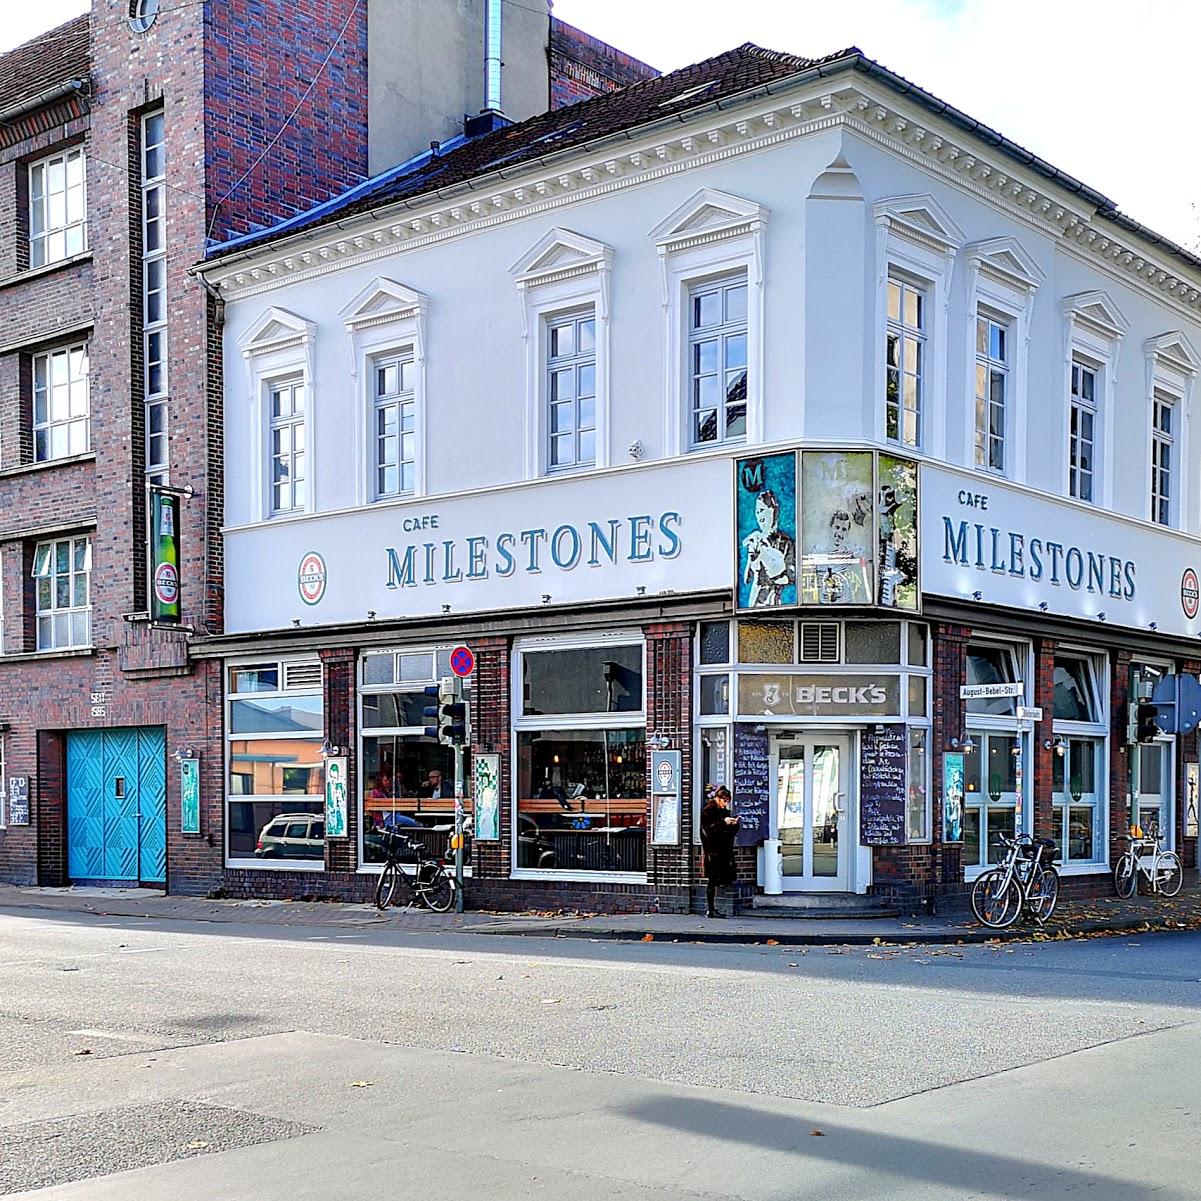 Restaurant "Cafe Milestones" in Bielefeld